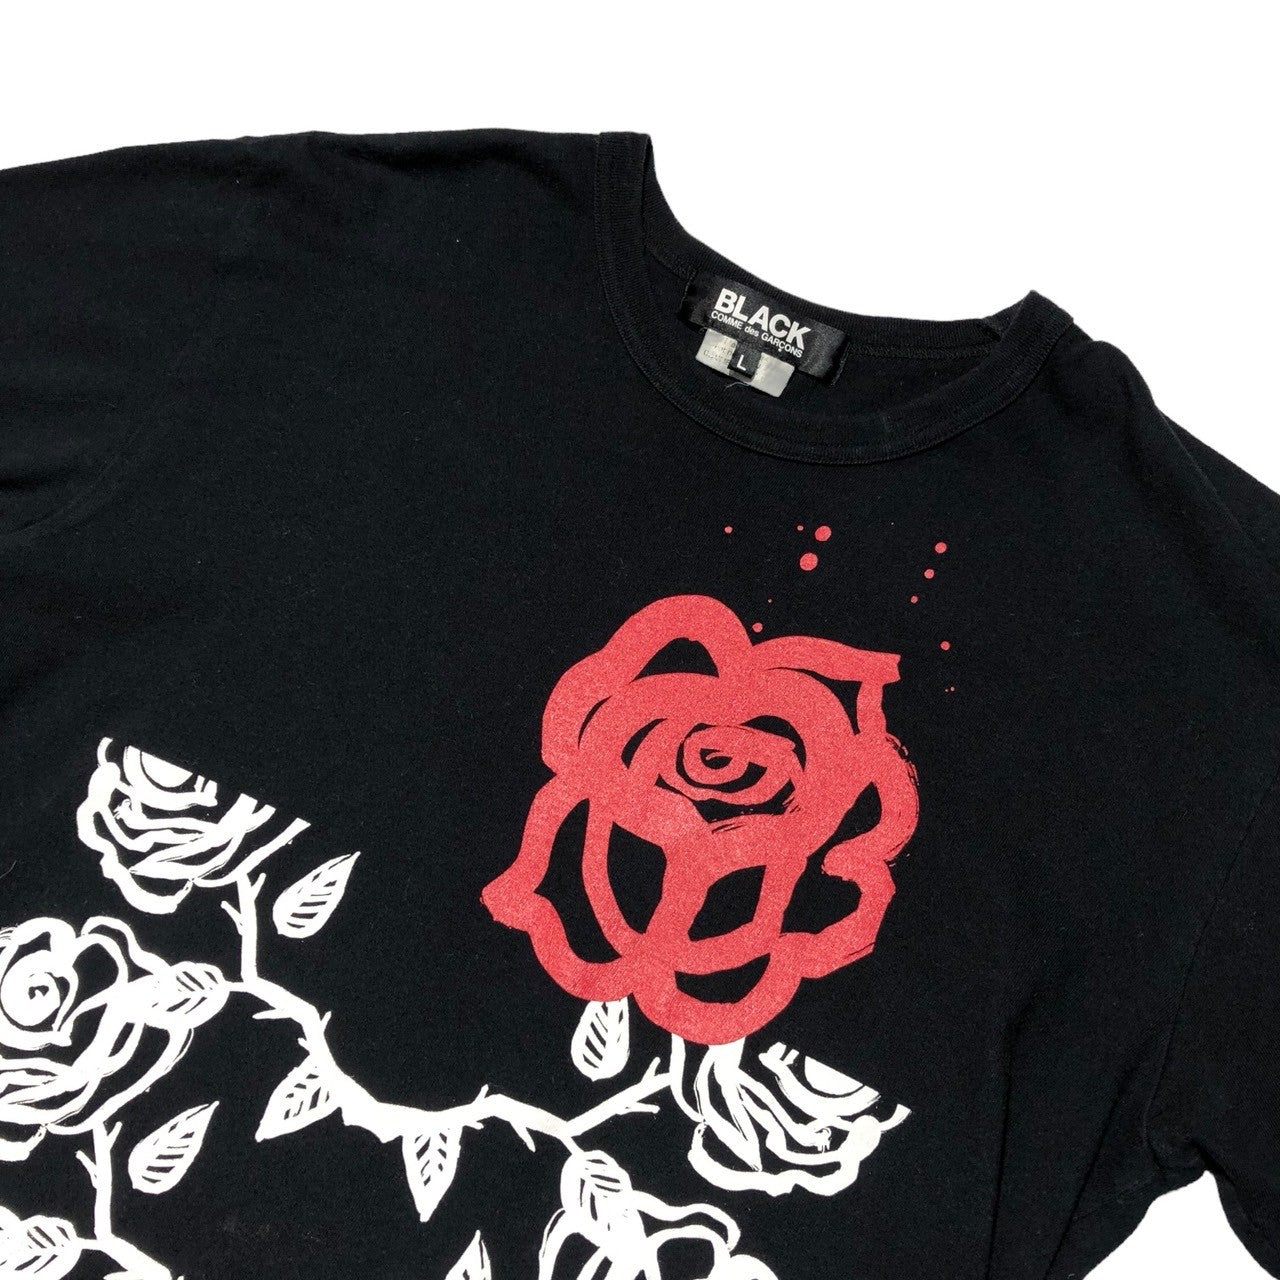 BLACK COMME des GARCONS(ブラックコムデギャルソン) 17AW rose print t-shirt 薔薇 プリント Tシャツ  1T-T005 SIZE L ブラック×レッド×ホワイト AD2017